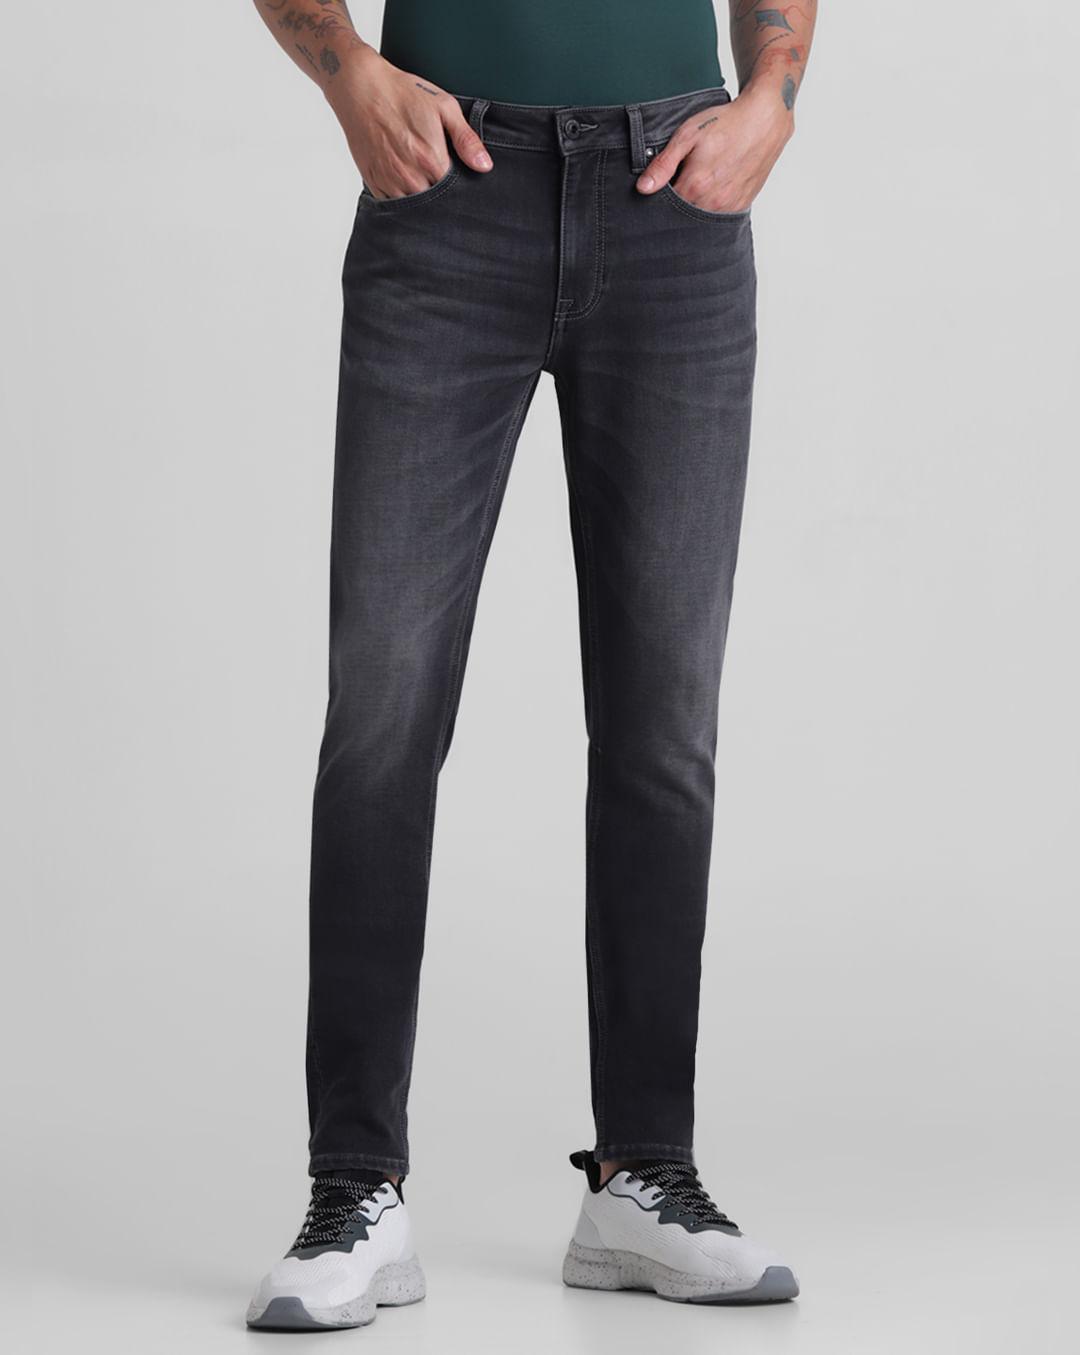 black-low-rise-liam-knit-skinny-jeans